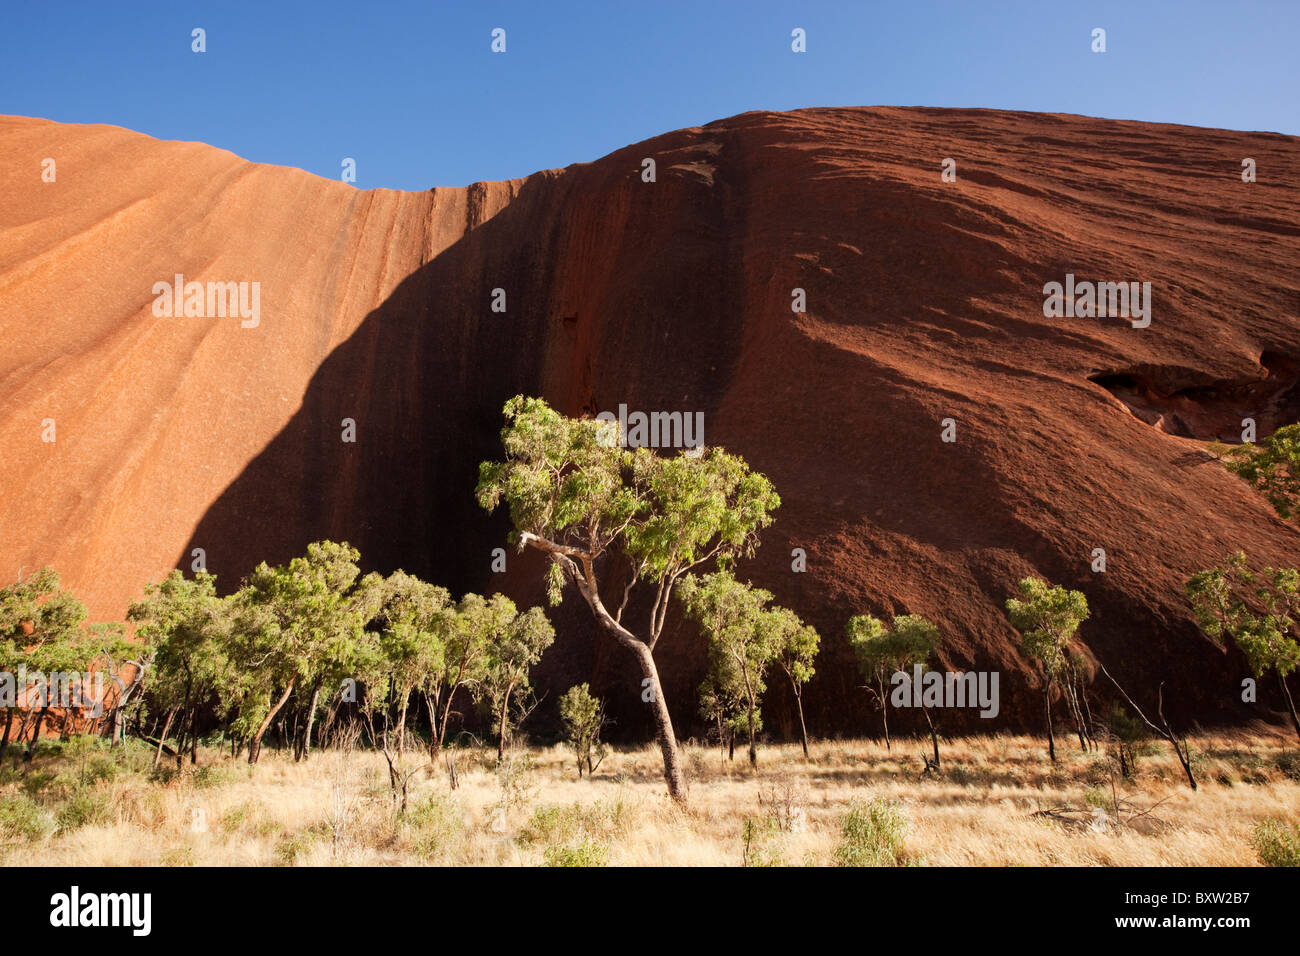 Australien-Northern Territory Uluru - Kata Tjuta National Park Wüste Eiche Bäume und Spinifex Grass an roten Felsen Ayers Stockfoto